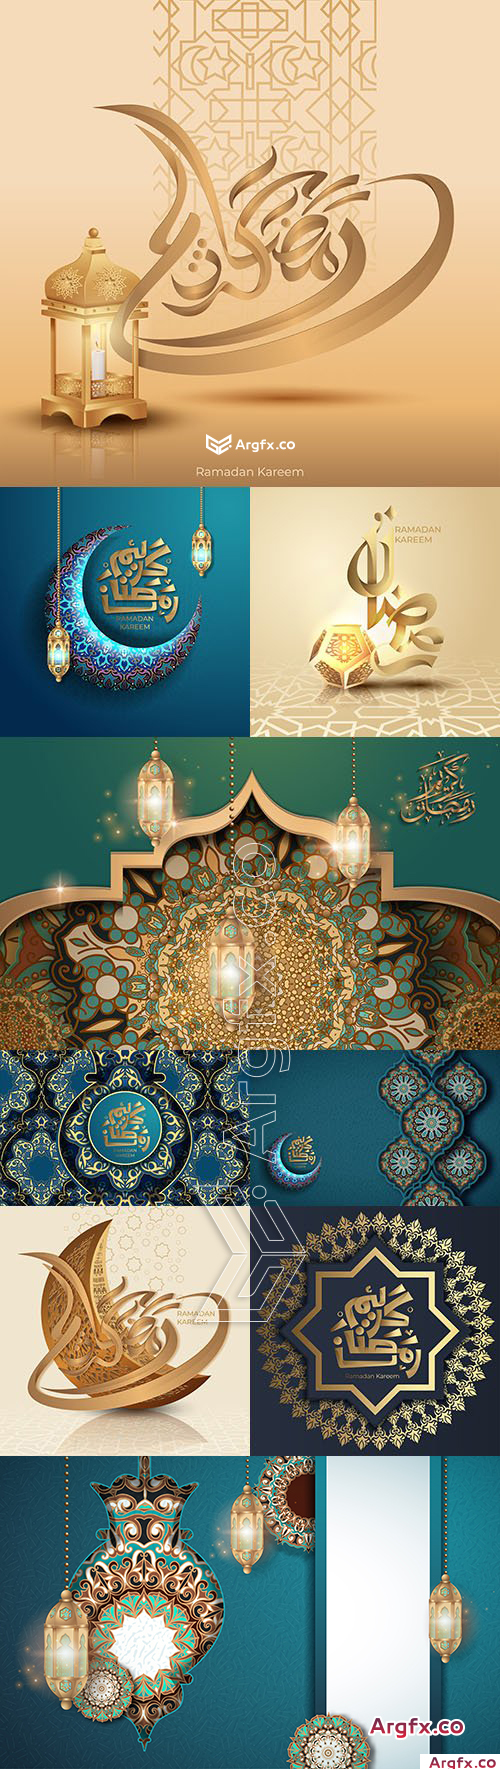 Ramadan Karrem design calligraphy greeting card